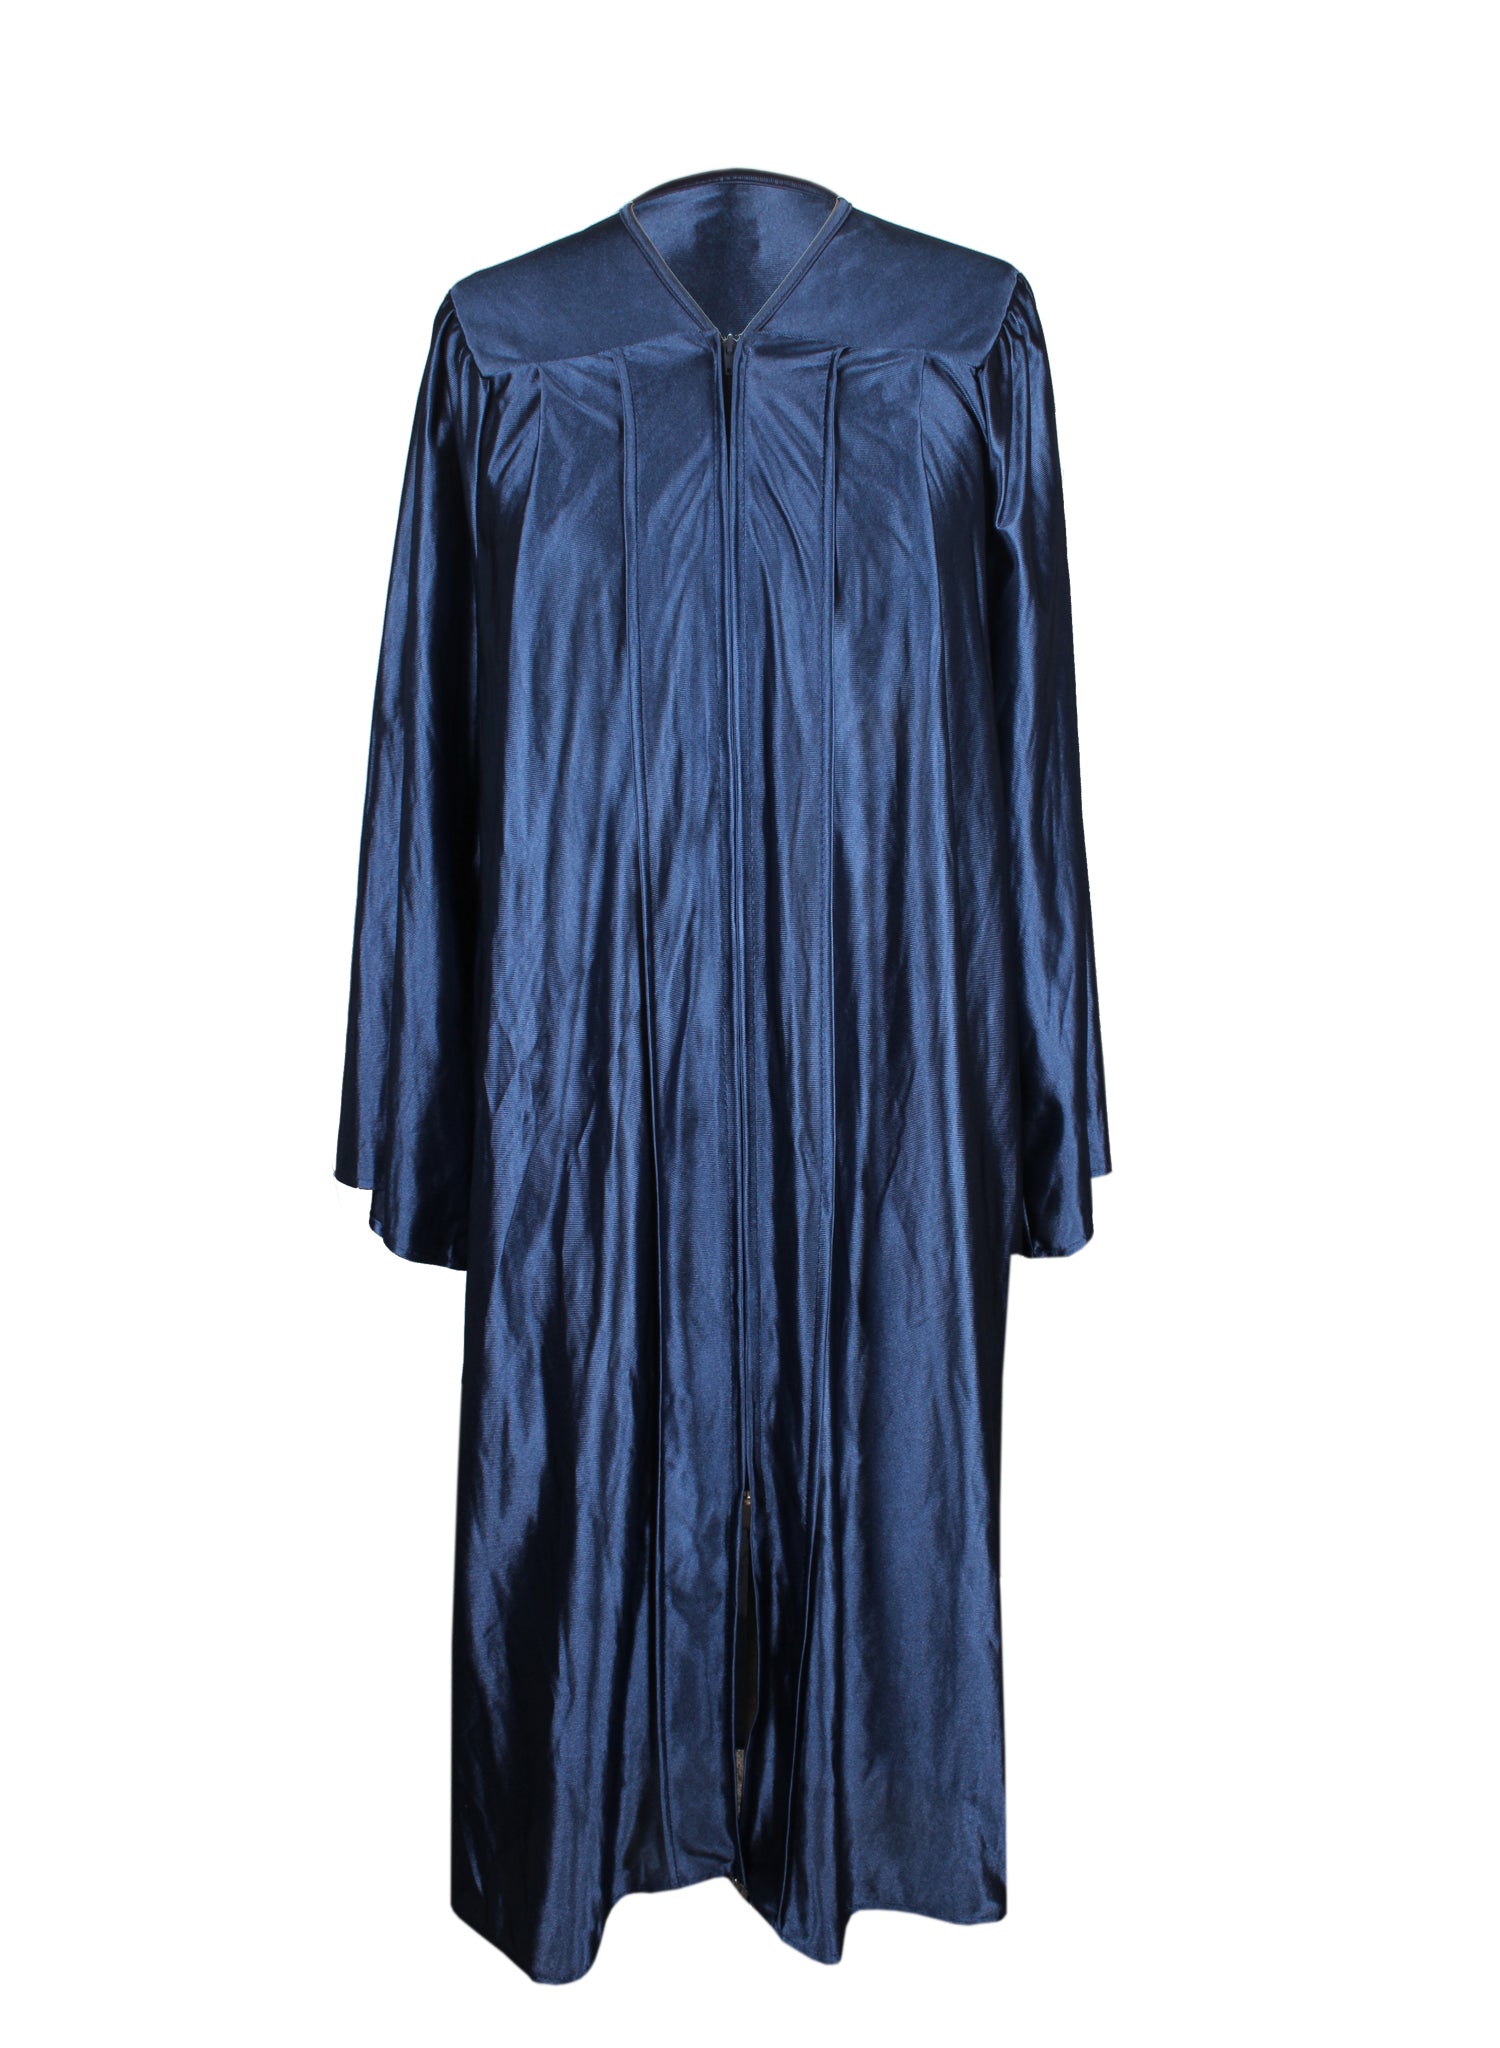 Unisex Shiny Graduation Gown|Choir Robe for Church|Cosplay Costume （Navy Blue）